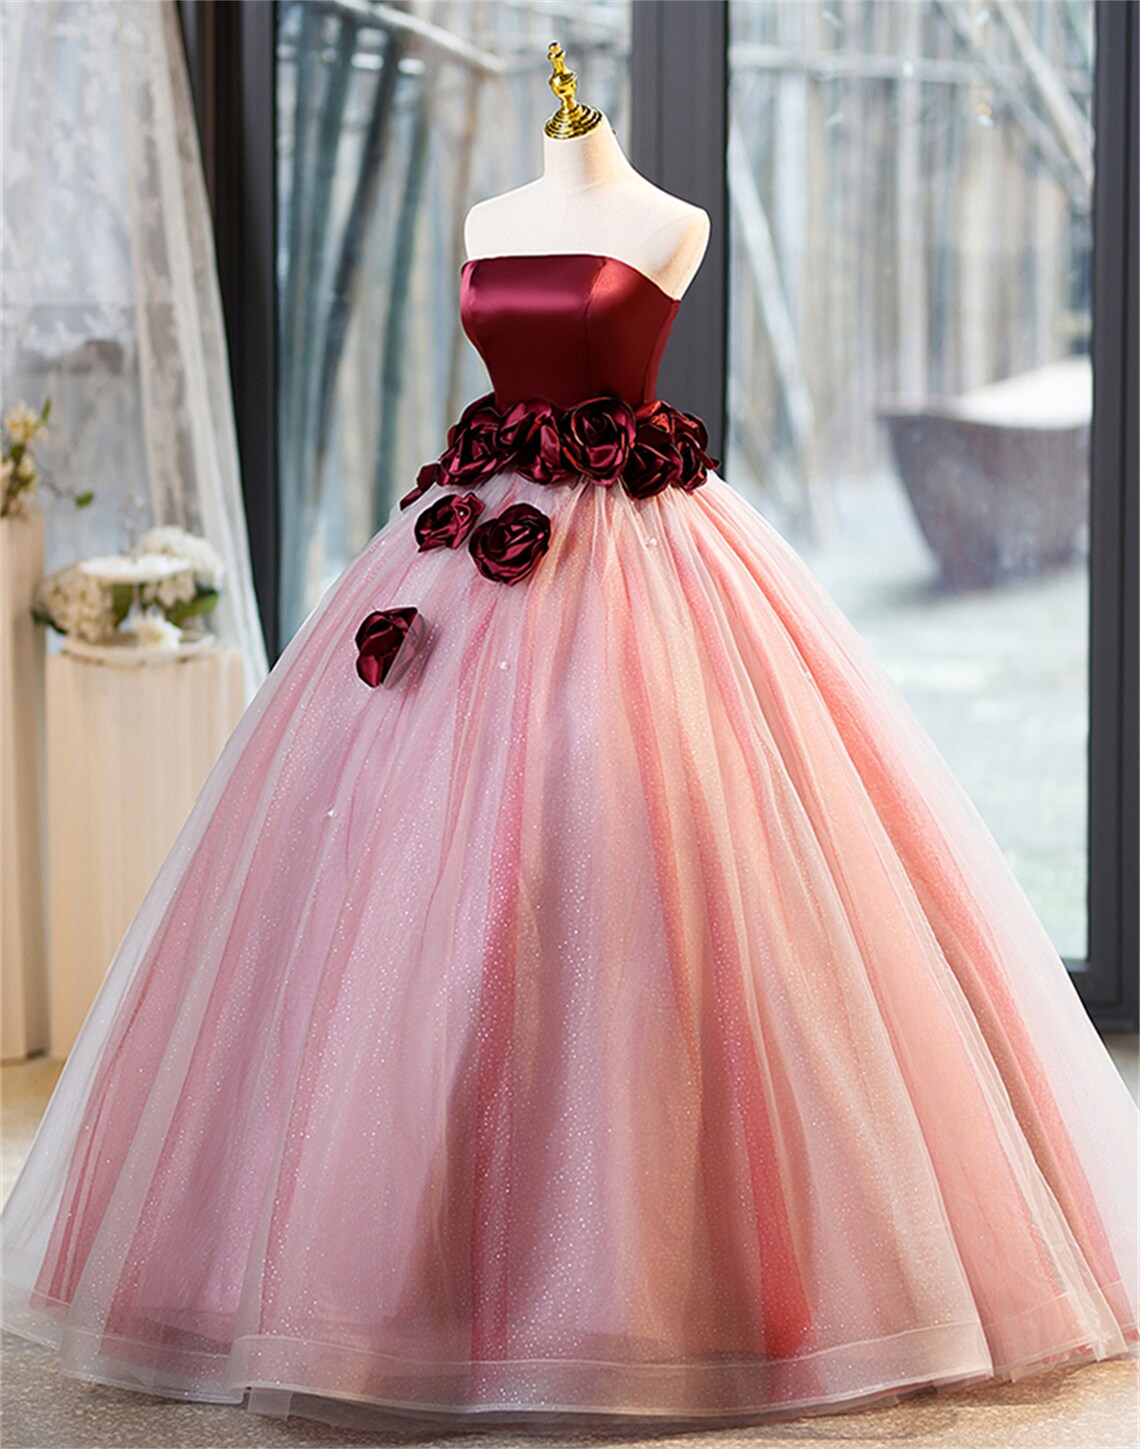 Romantic Bordeaux And Blush Floral Ball Gown